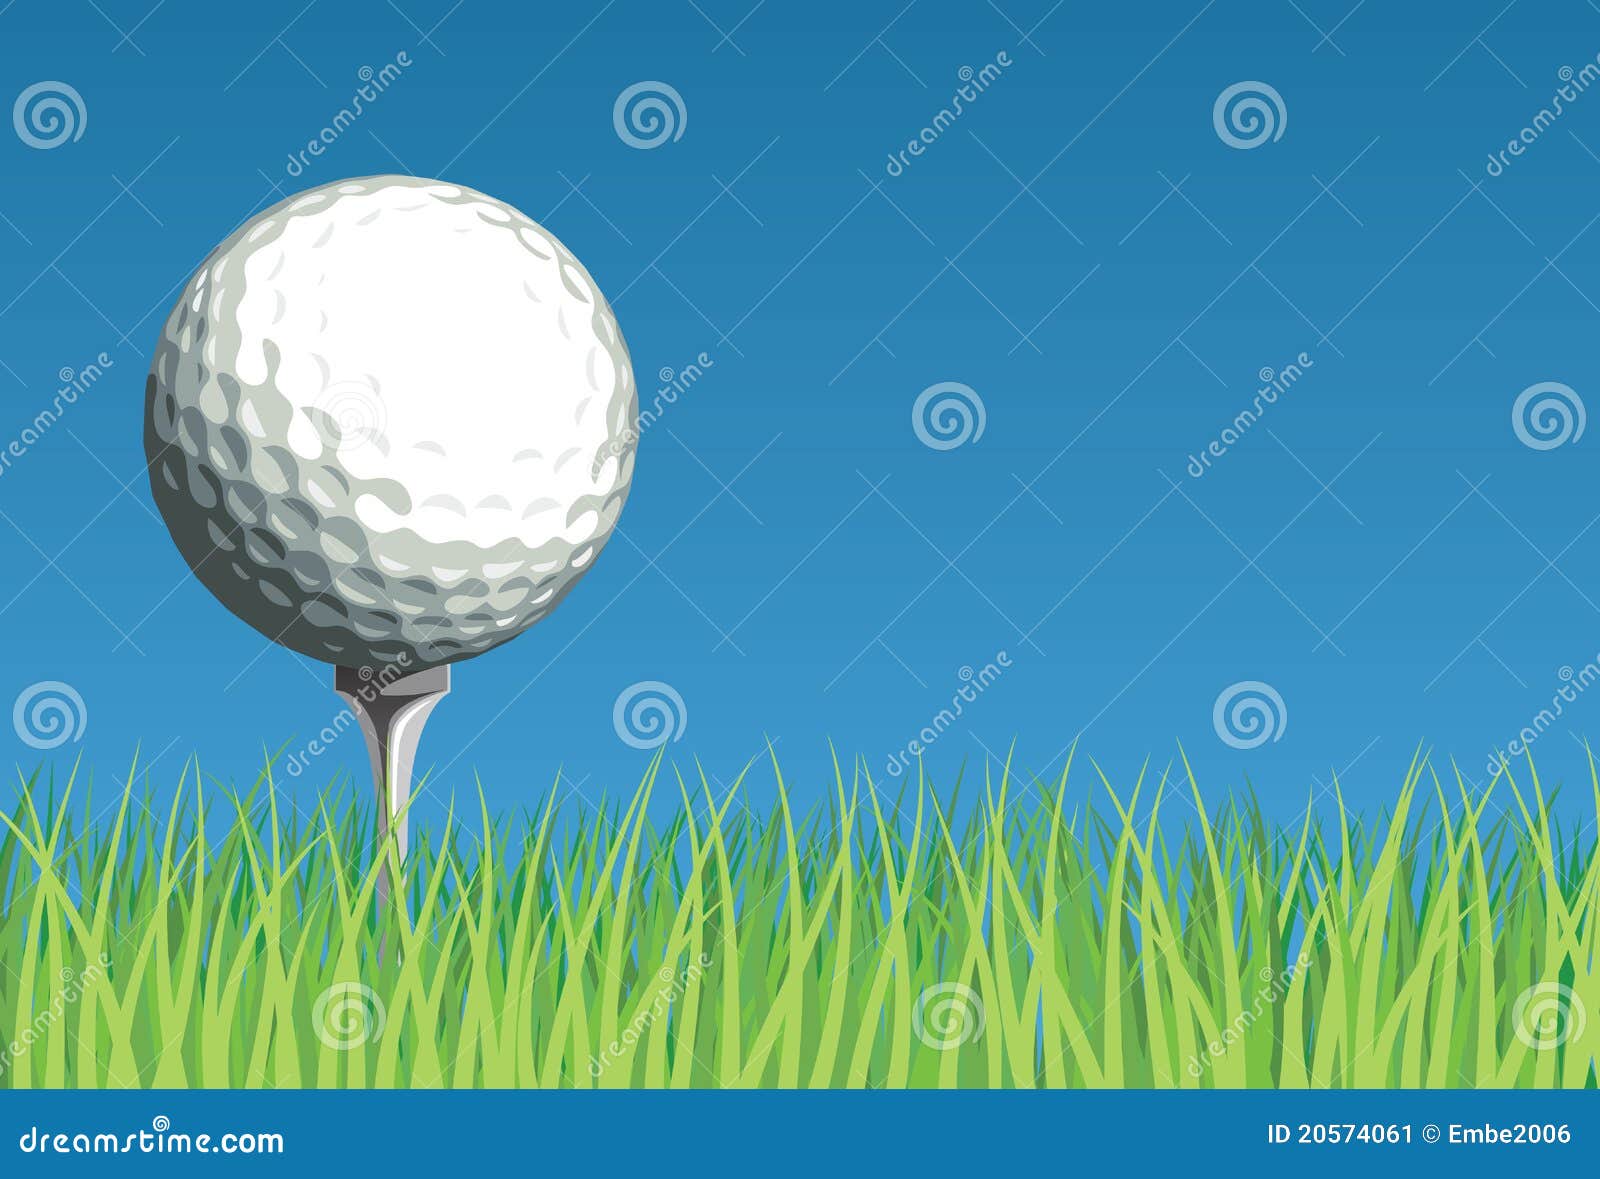 Golf Ball On Grass Stock Image - Image: 20574061